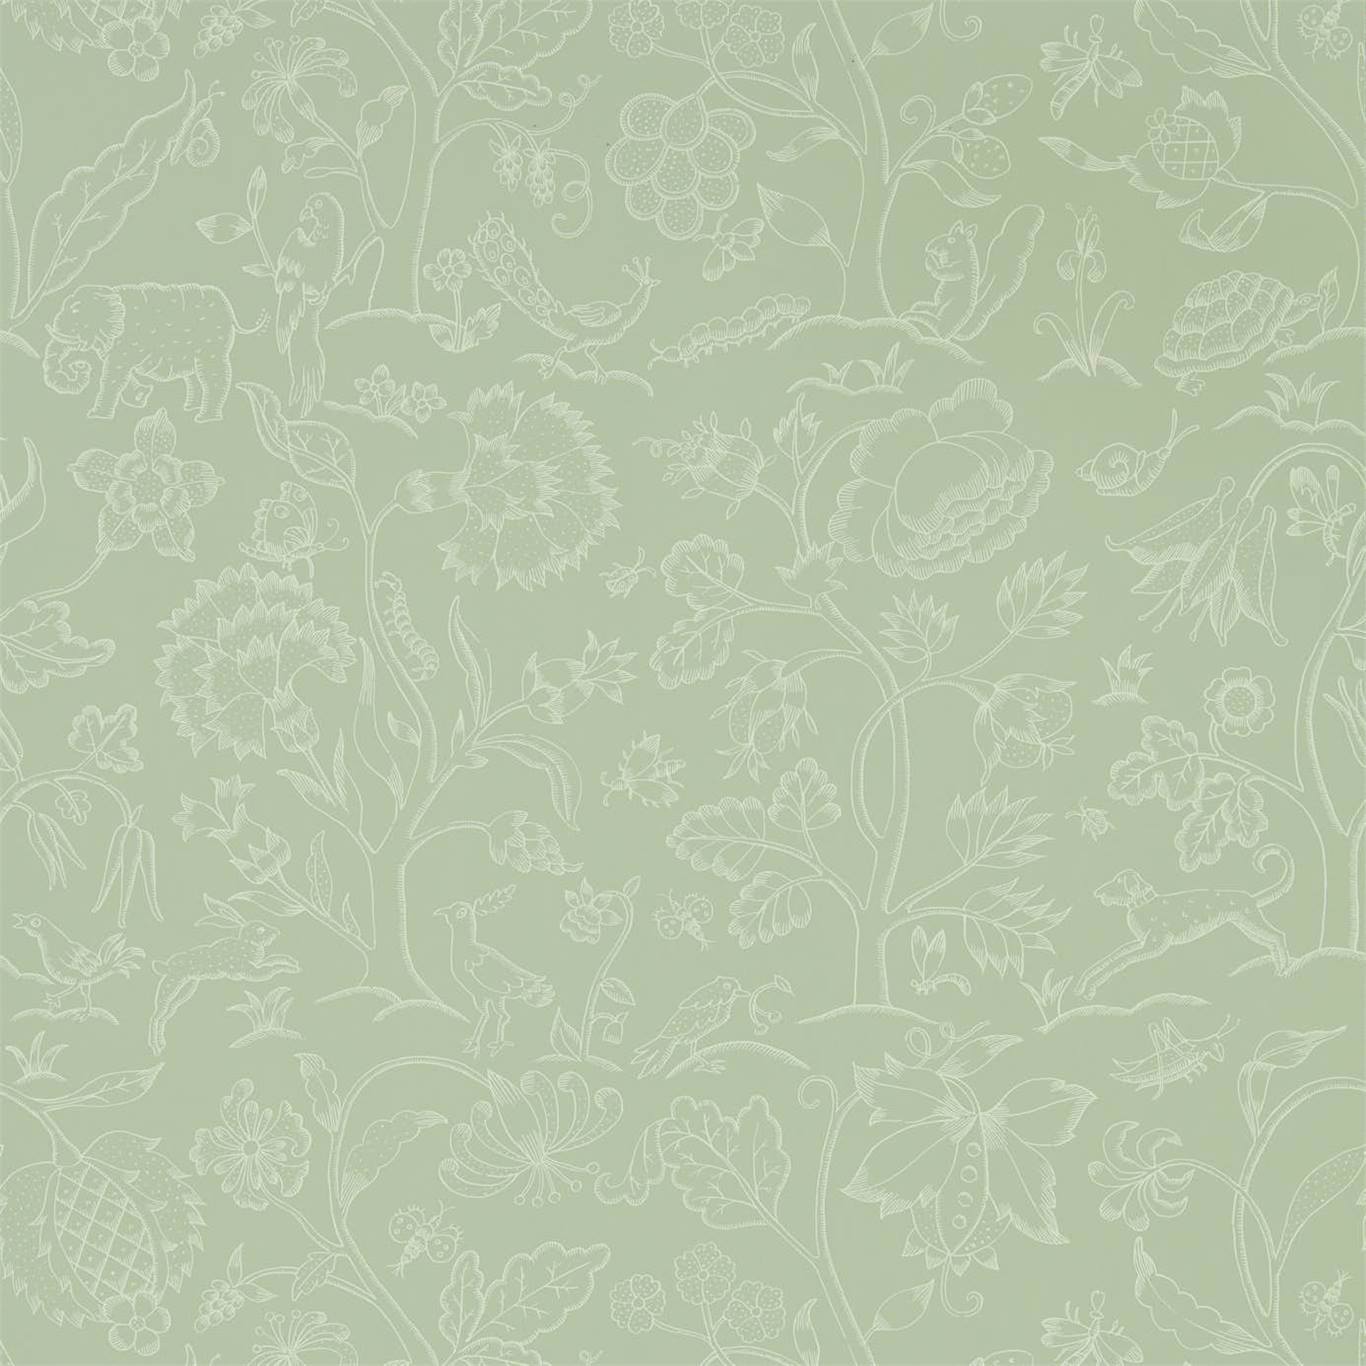 Middlemore Sage Grey Wallpaper DMSW216694 by Morris & Co